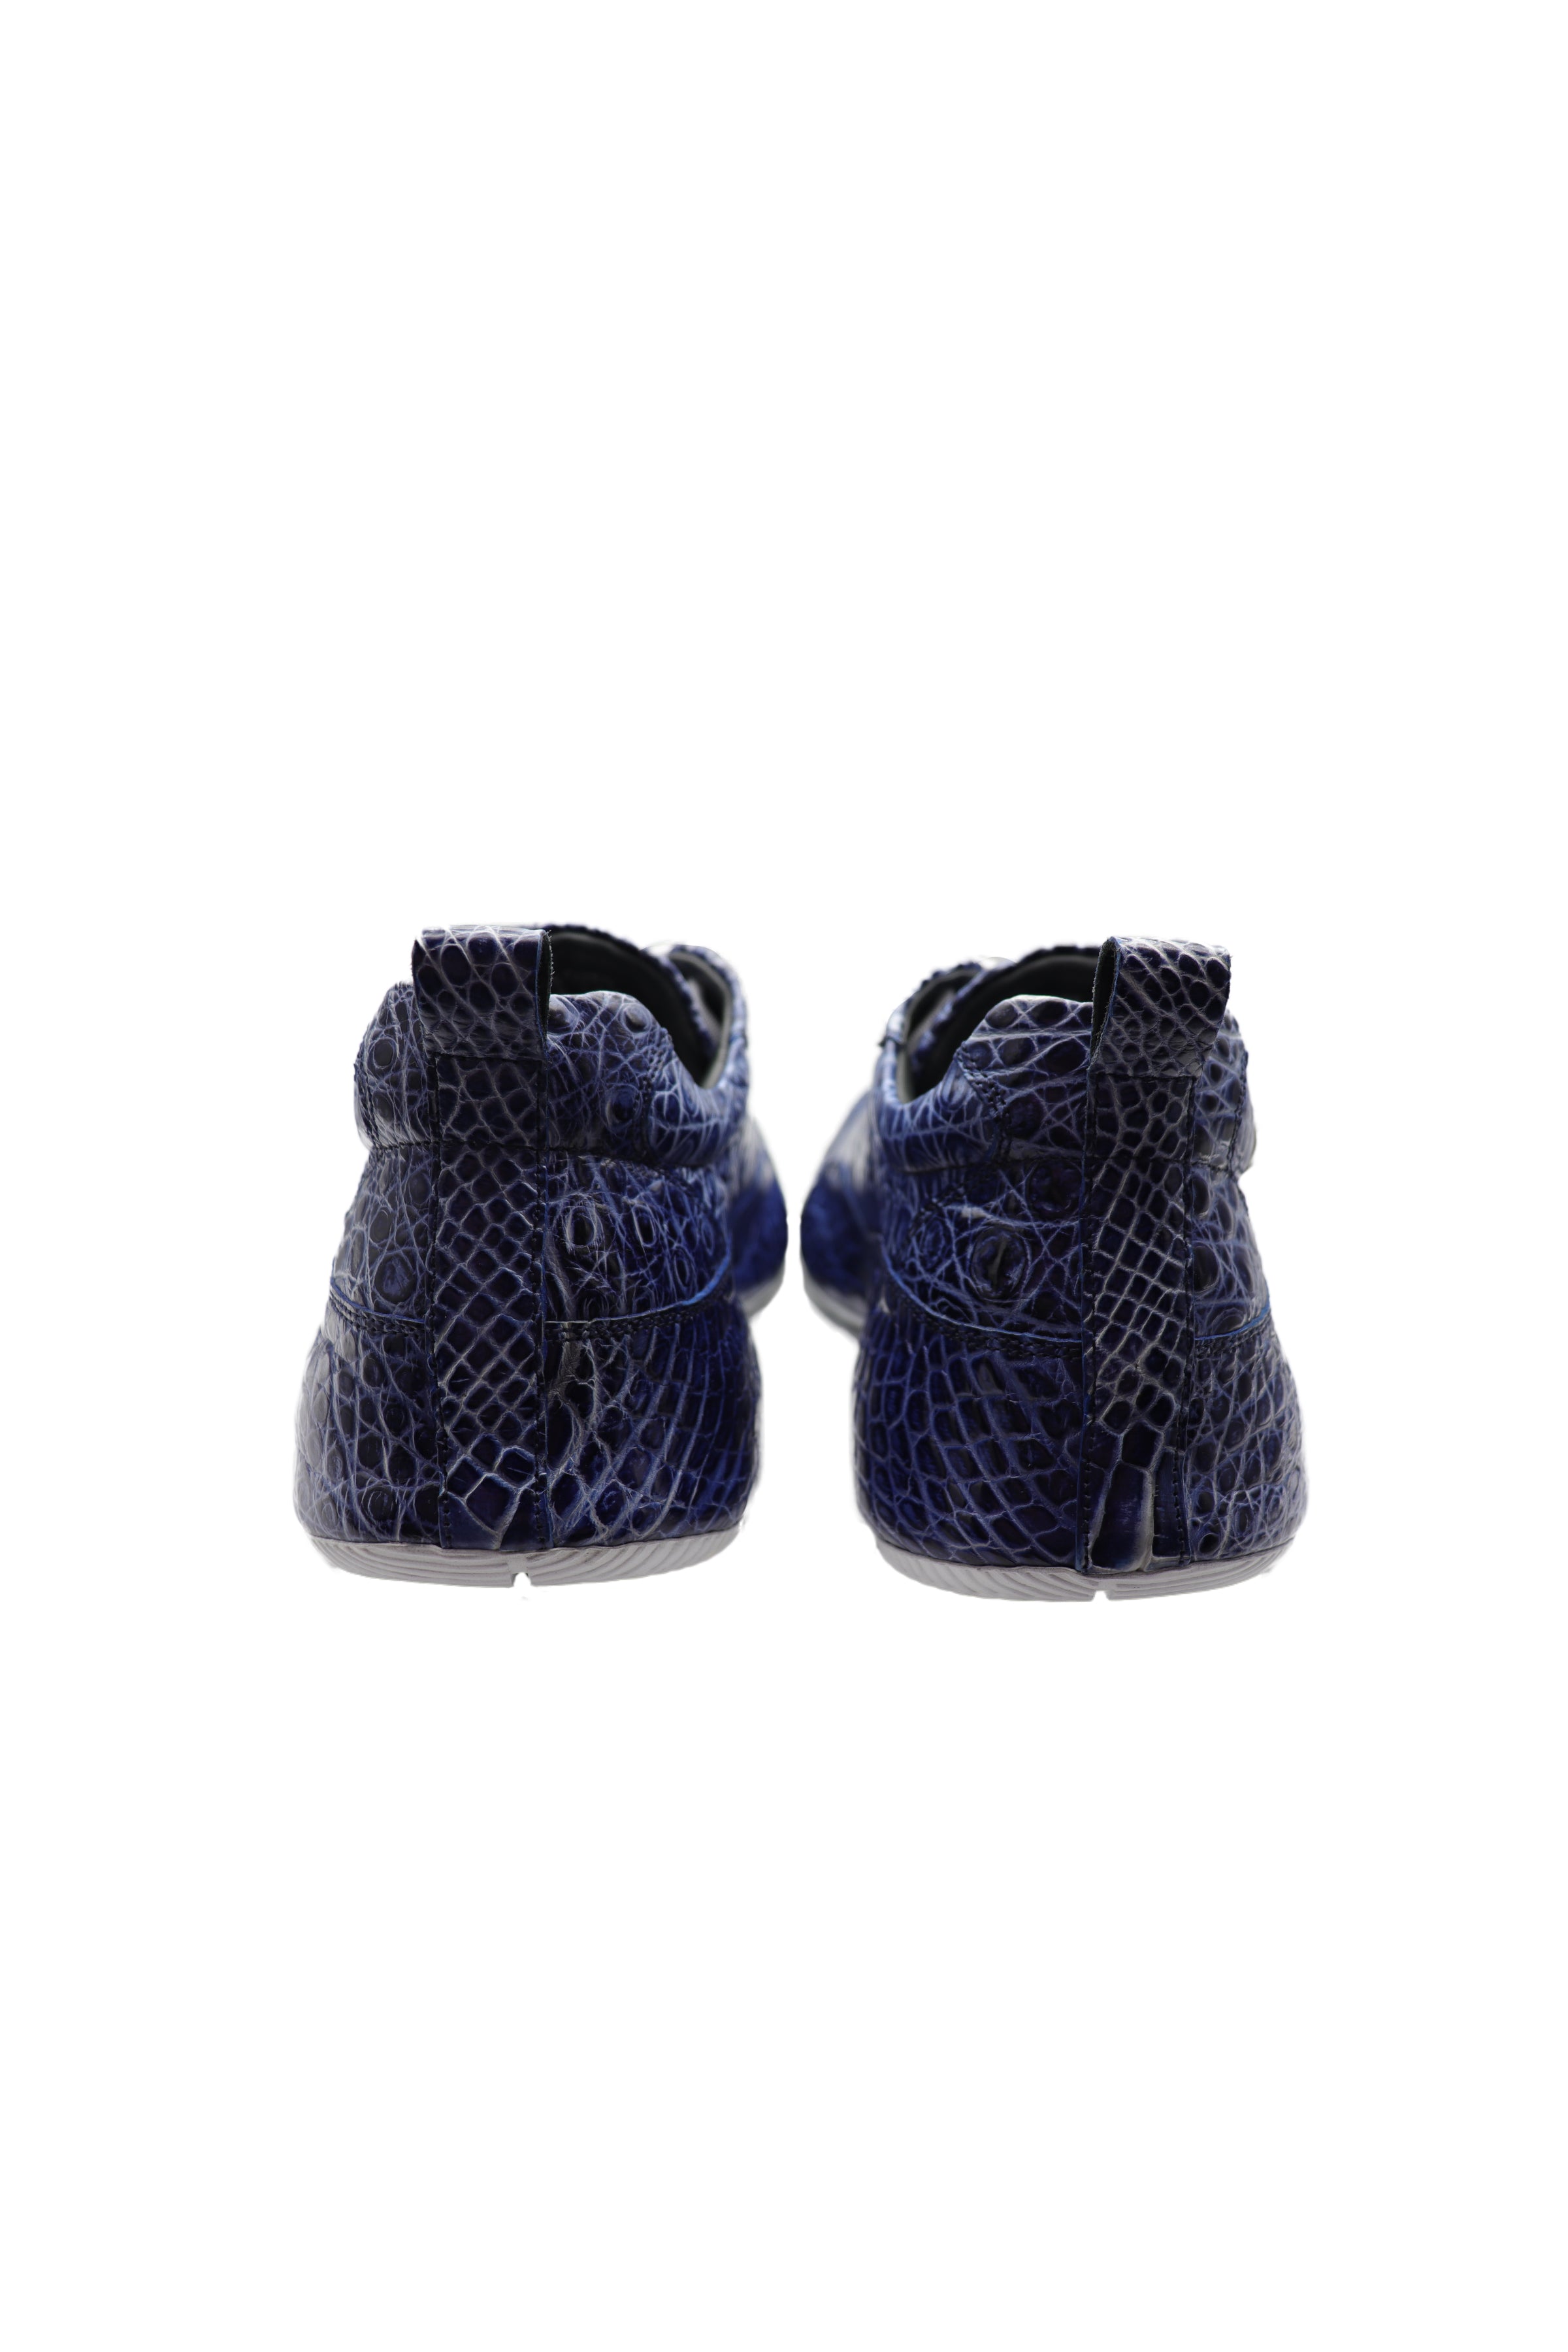 Polishing Blue Crocodile sneaker Casual Men's Shoes